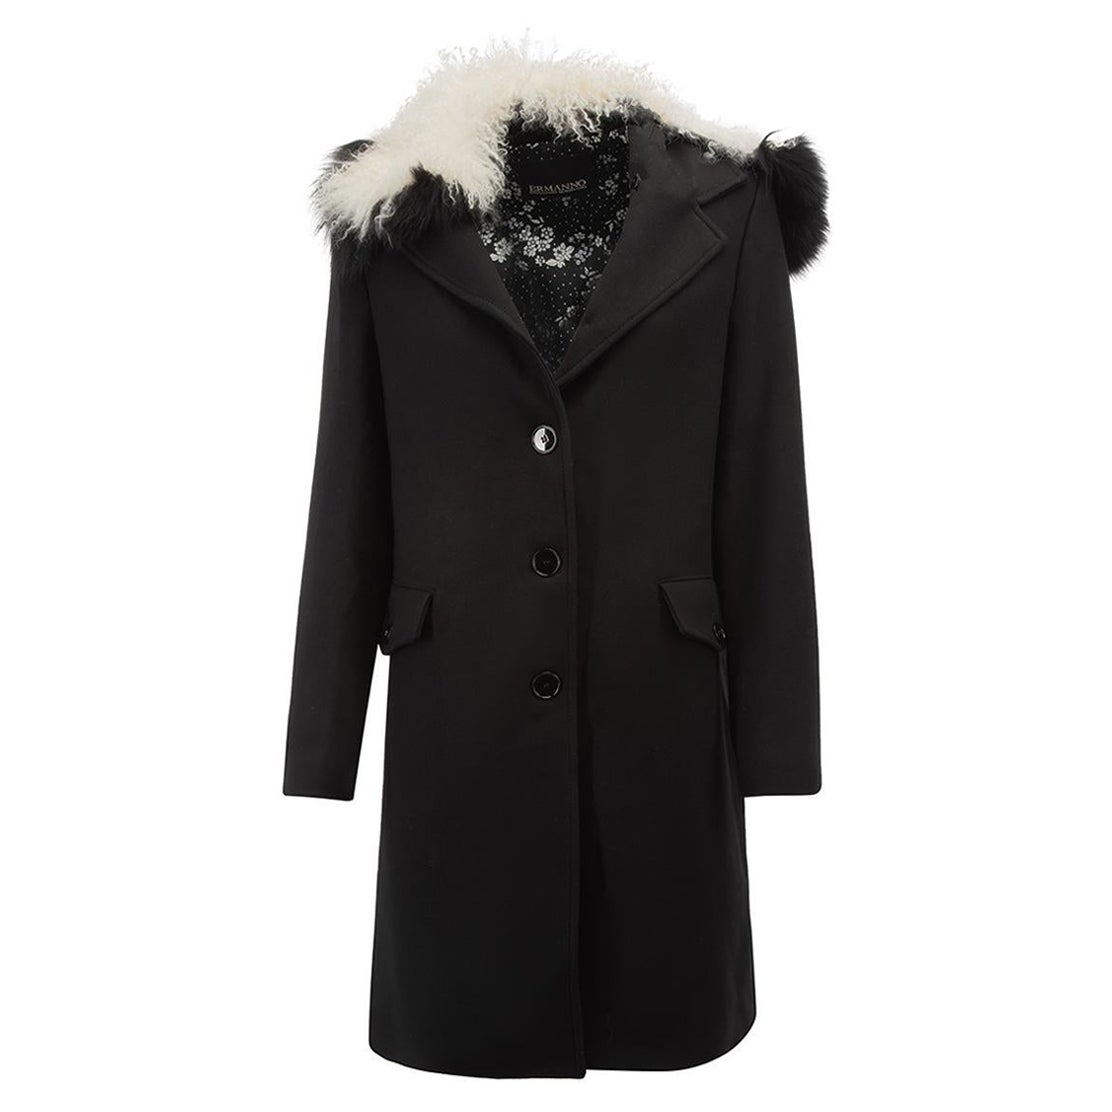 Ermanno Scervino Women's Black Faux Fur Trimmed Collar Coat